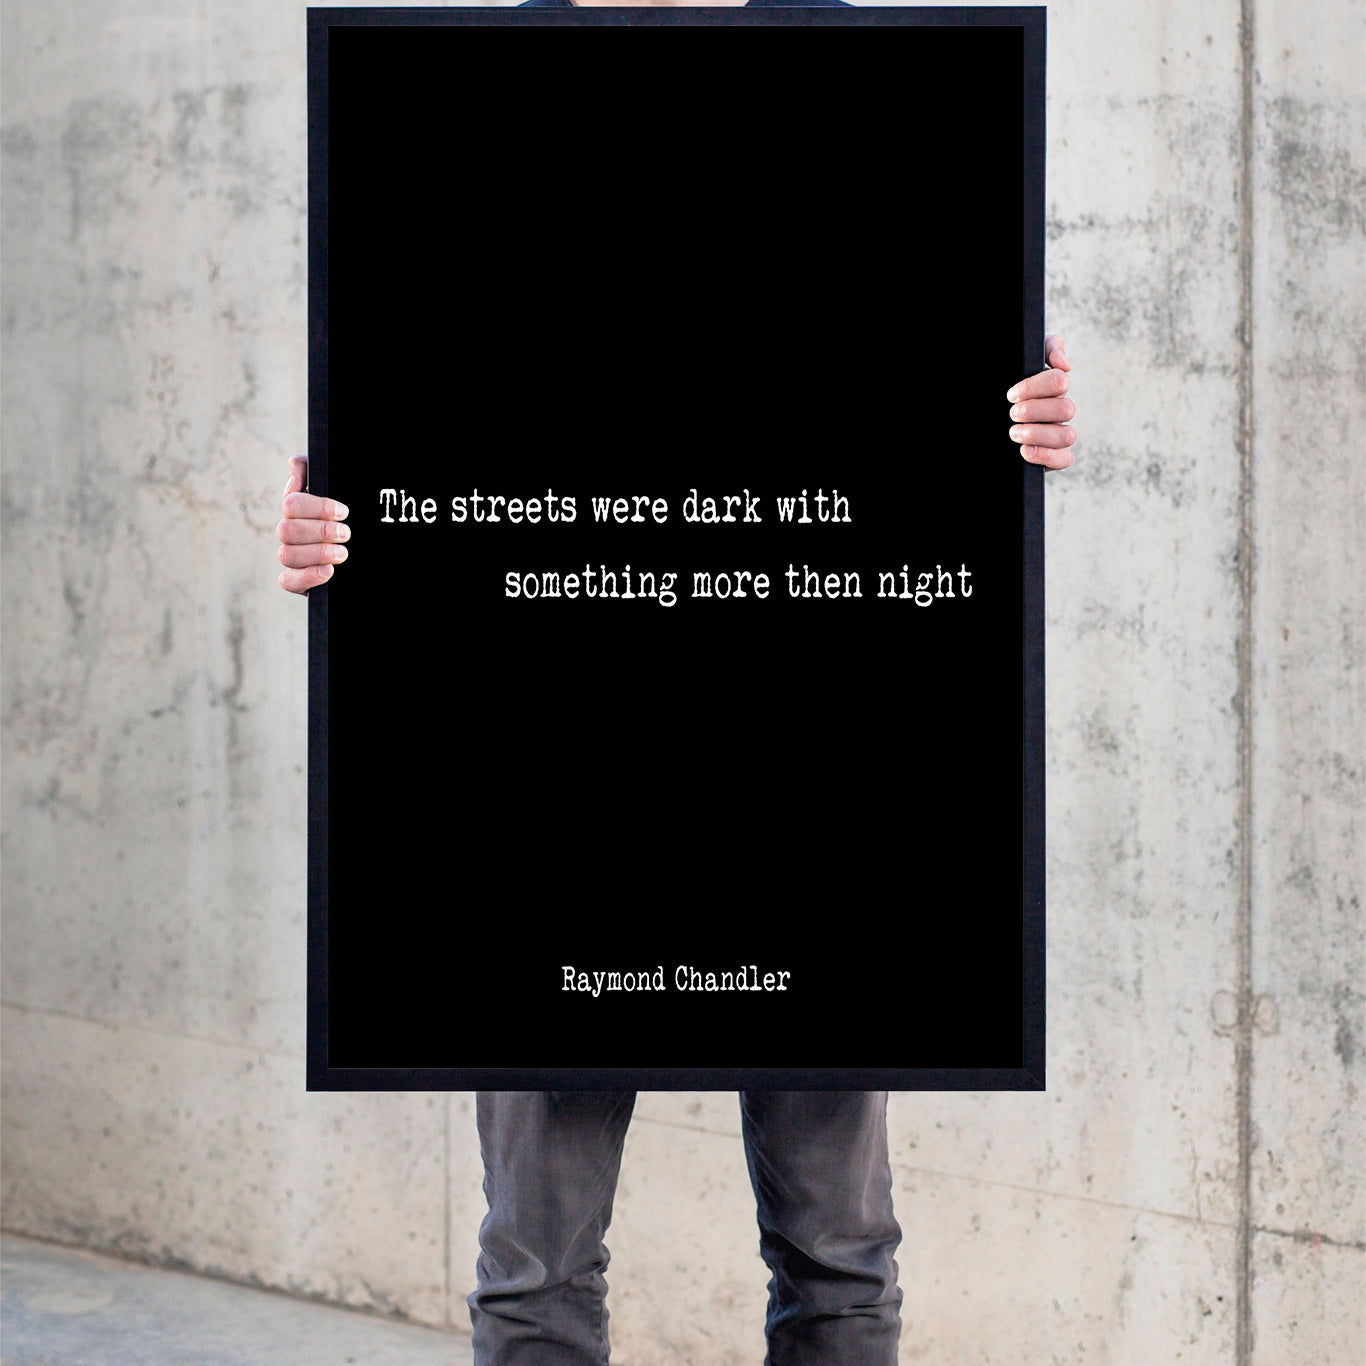 Raymond Chandler quote print, The streets were dark 